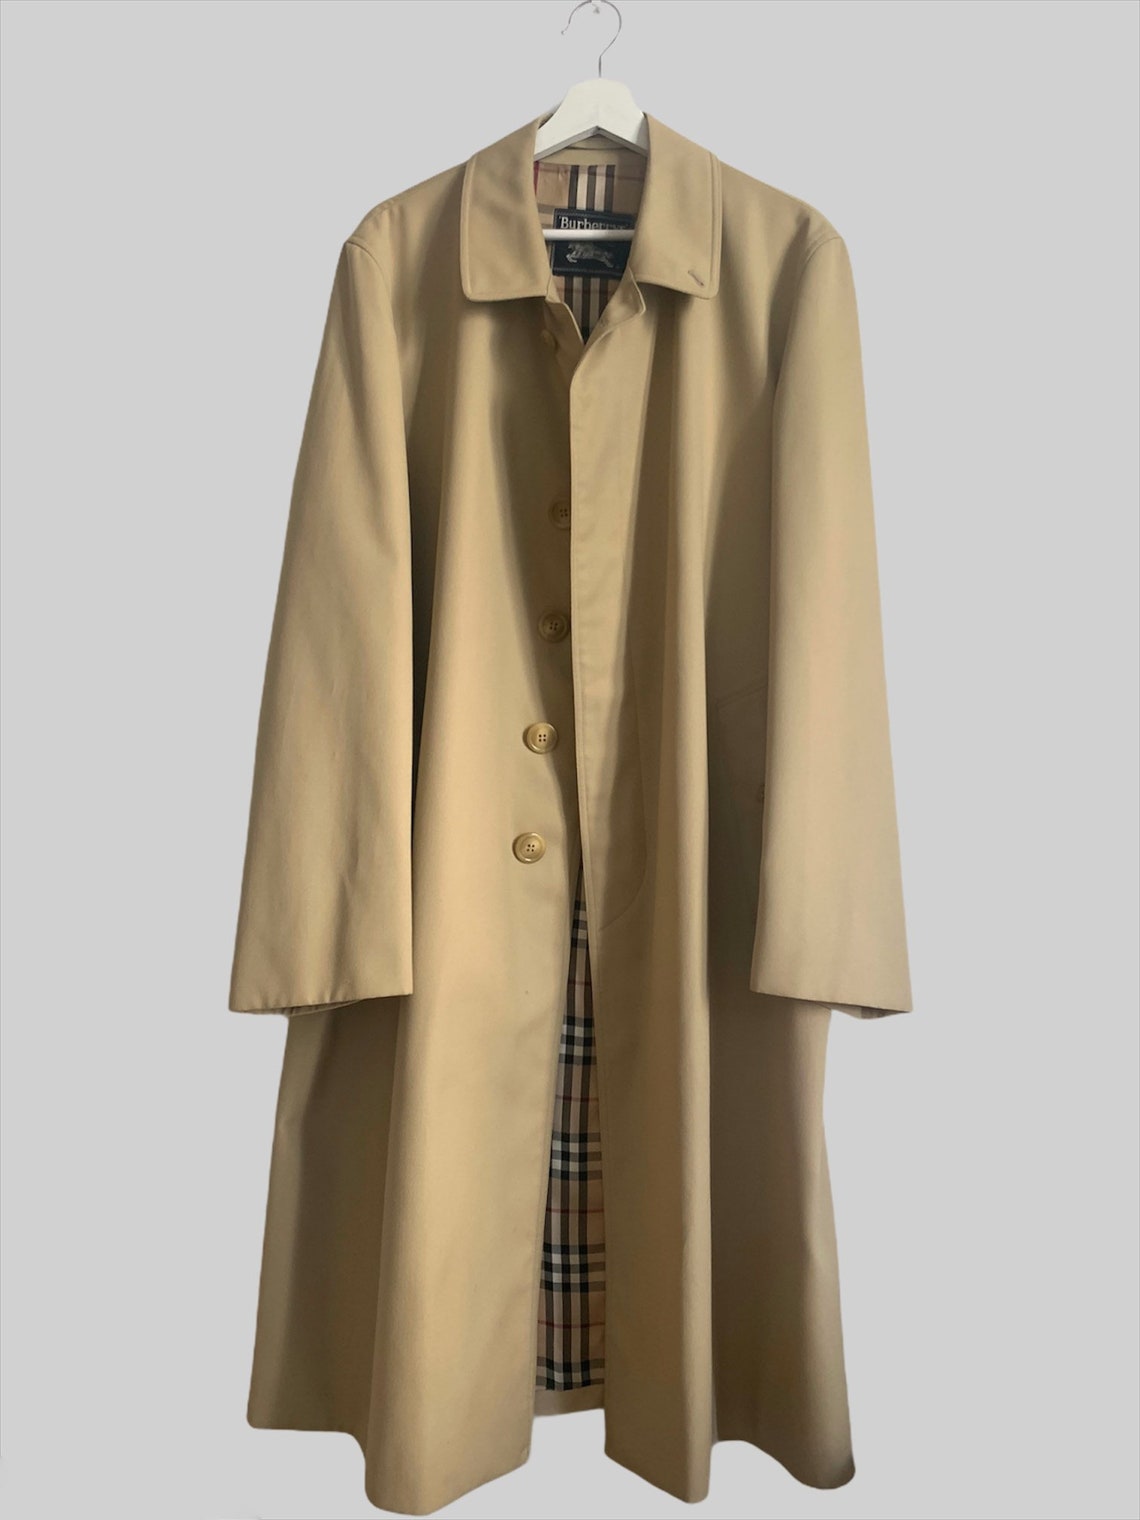 Vintage Burberry mens trench coat / 1980s Burberrys Prorsum | Etsy